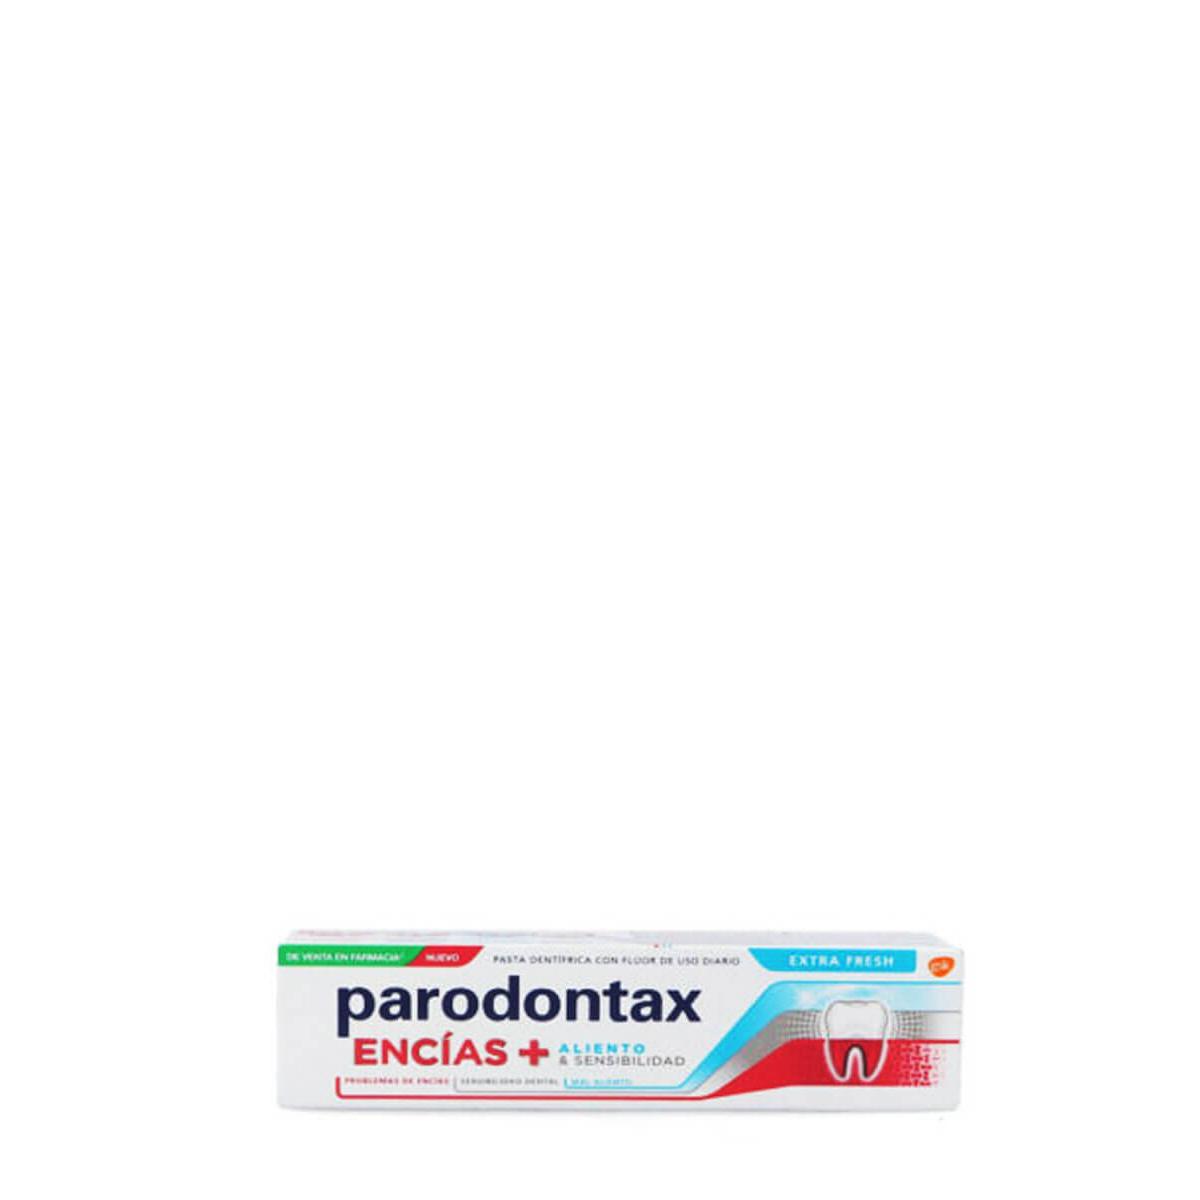 Parodontax - Parodontax encías+ aliento + sensibilidad 75ml